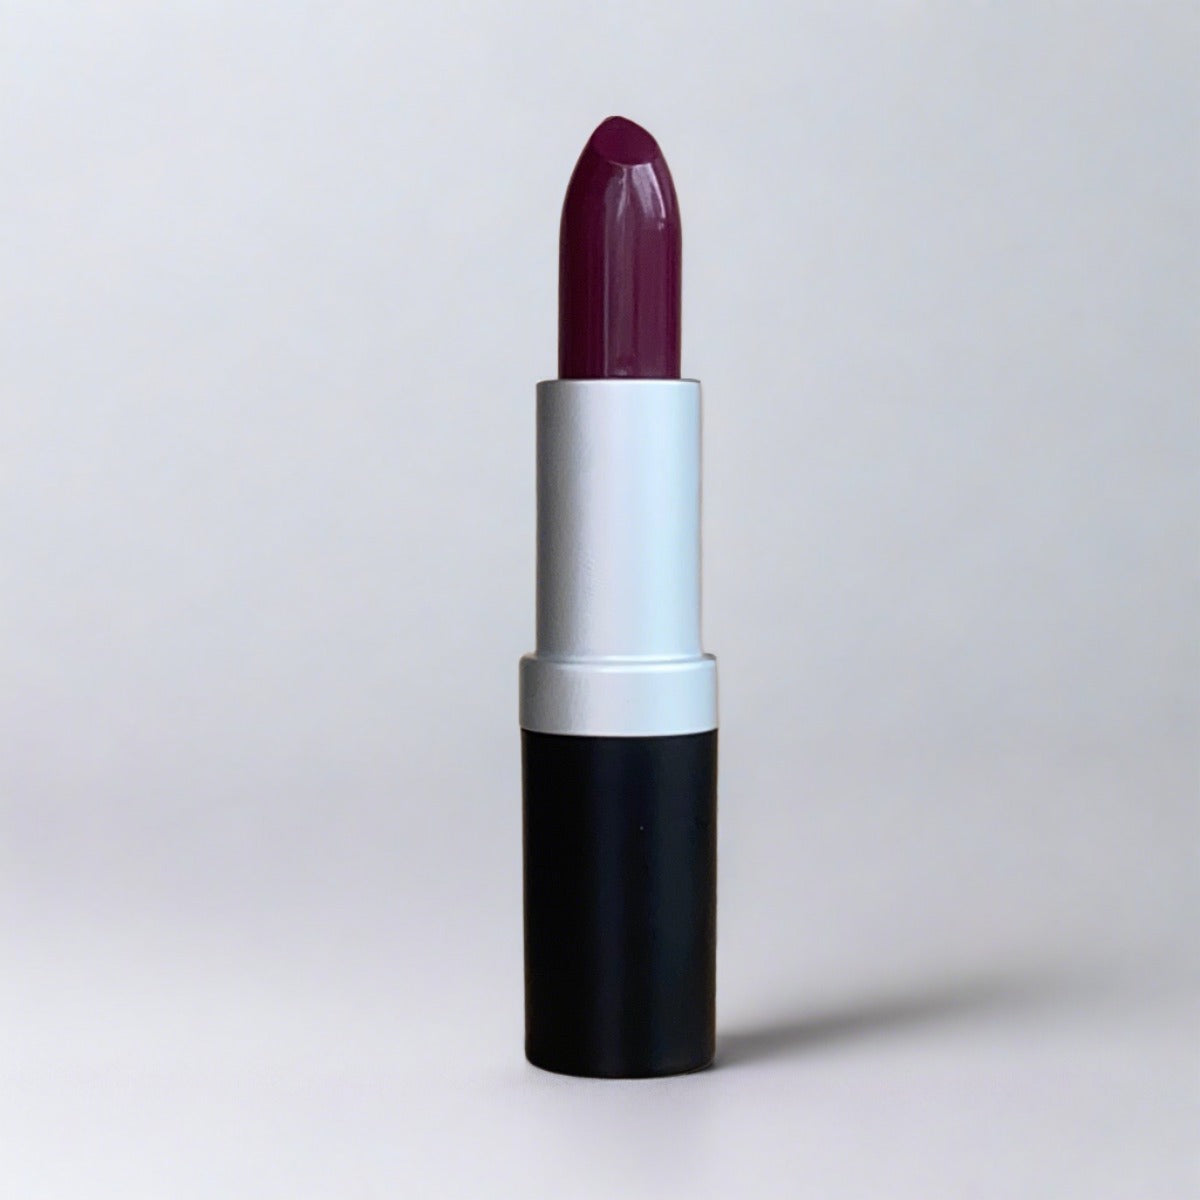 Deep burgundy wine lipstick for a dark look this season